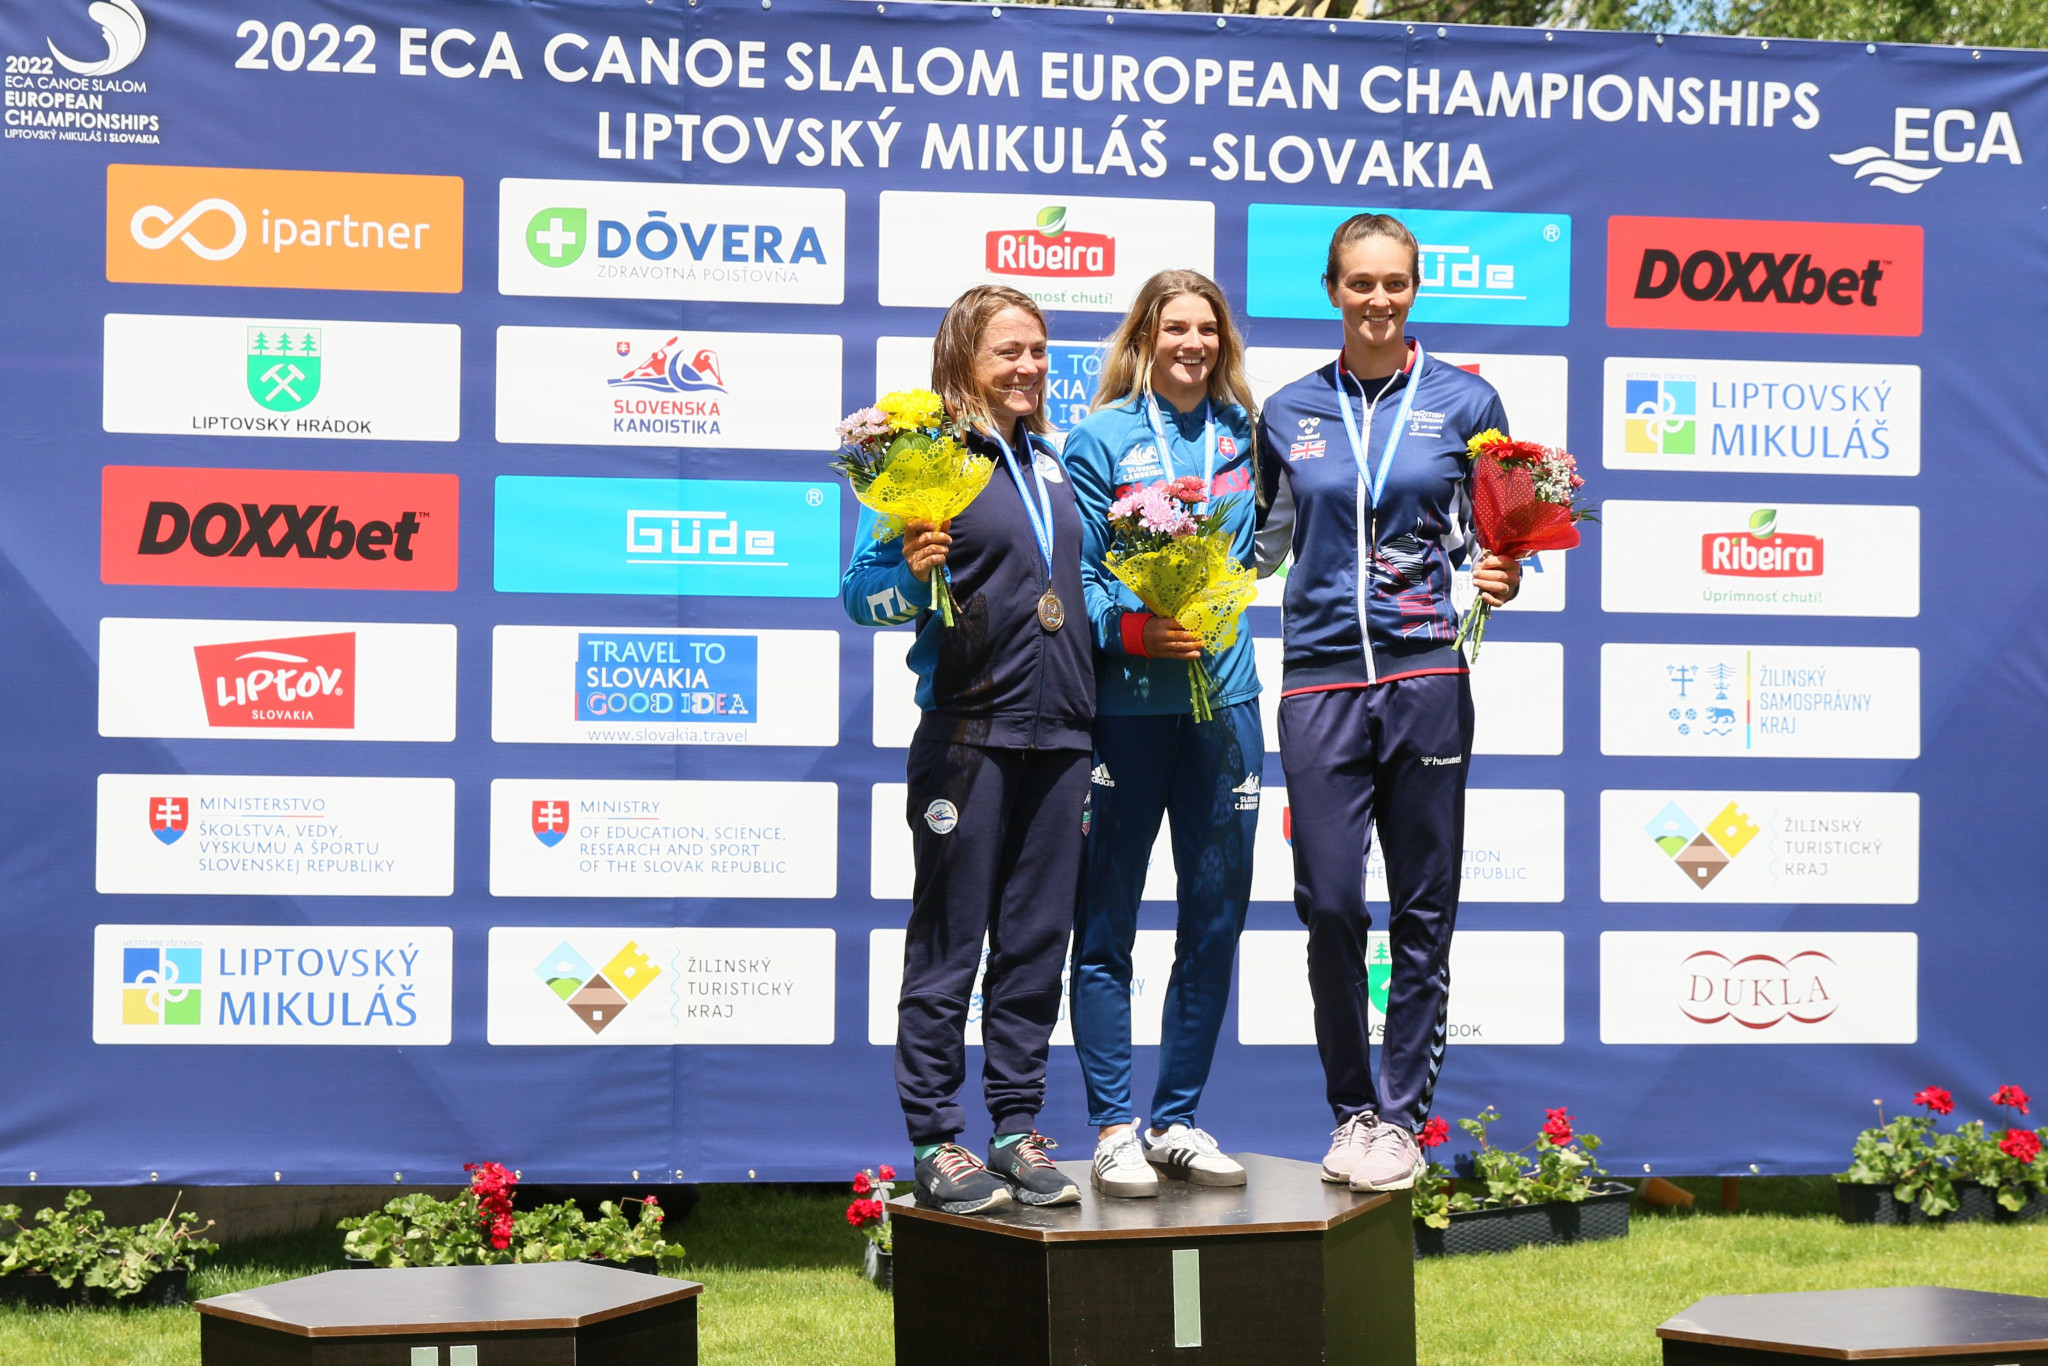 Horn and Mintálová earn joint gold medals at ECA Canoe Slalom European Championships